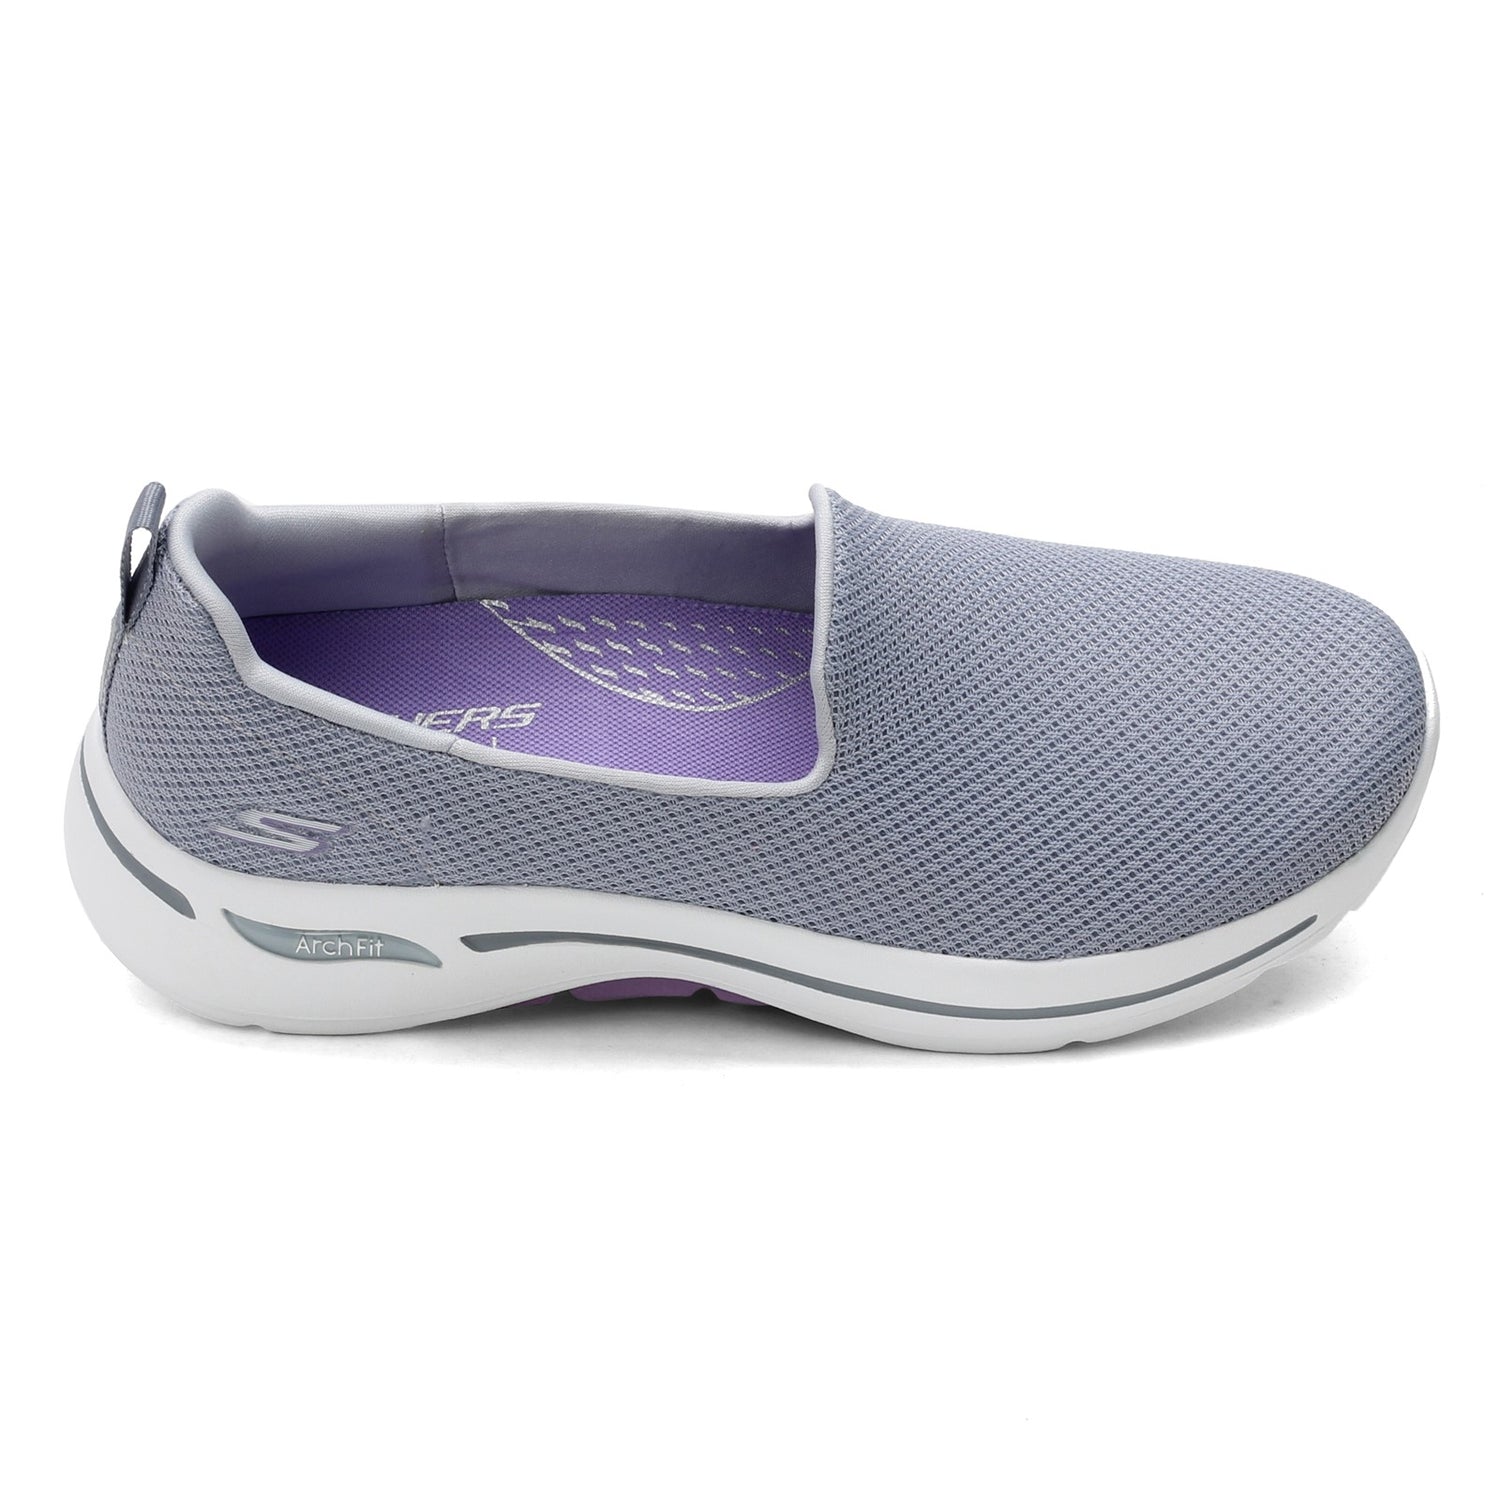 Peltz Shoes  Women's Skechers GOwalk Arch Fit - Grateful Slip-On GRAY LAVENDER 124401-GYLV